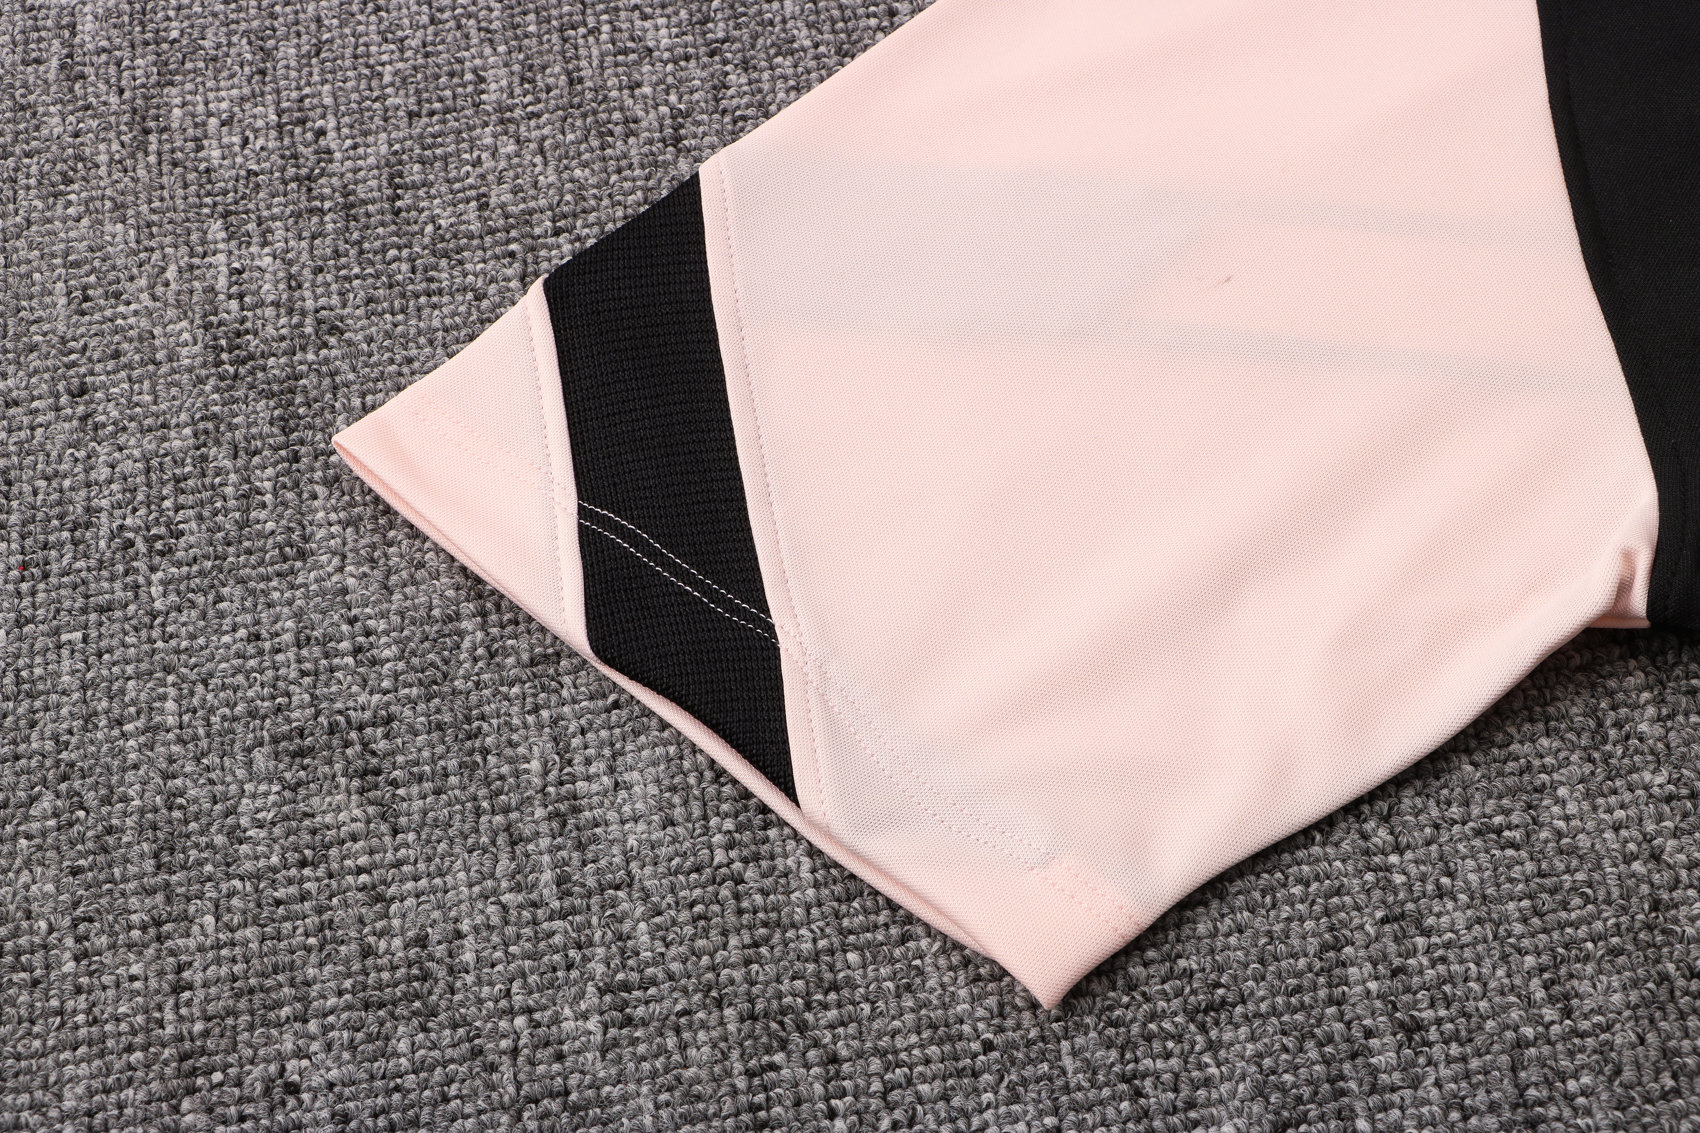 PSG Soccer Polo Jersey Replica Black - Pink Mens 2021/22